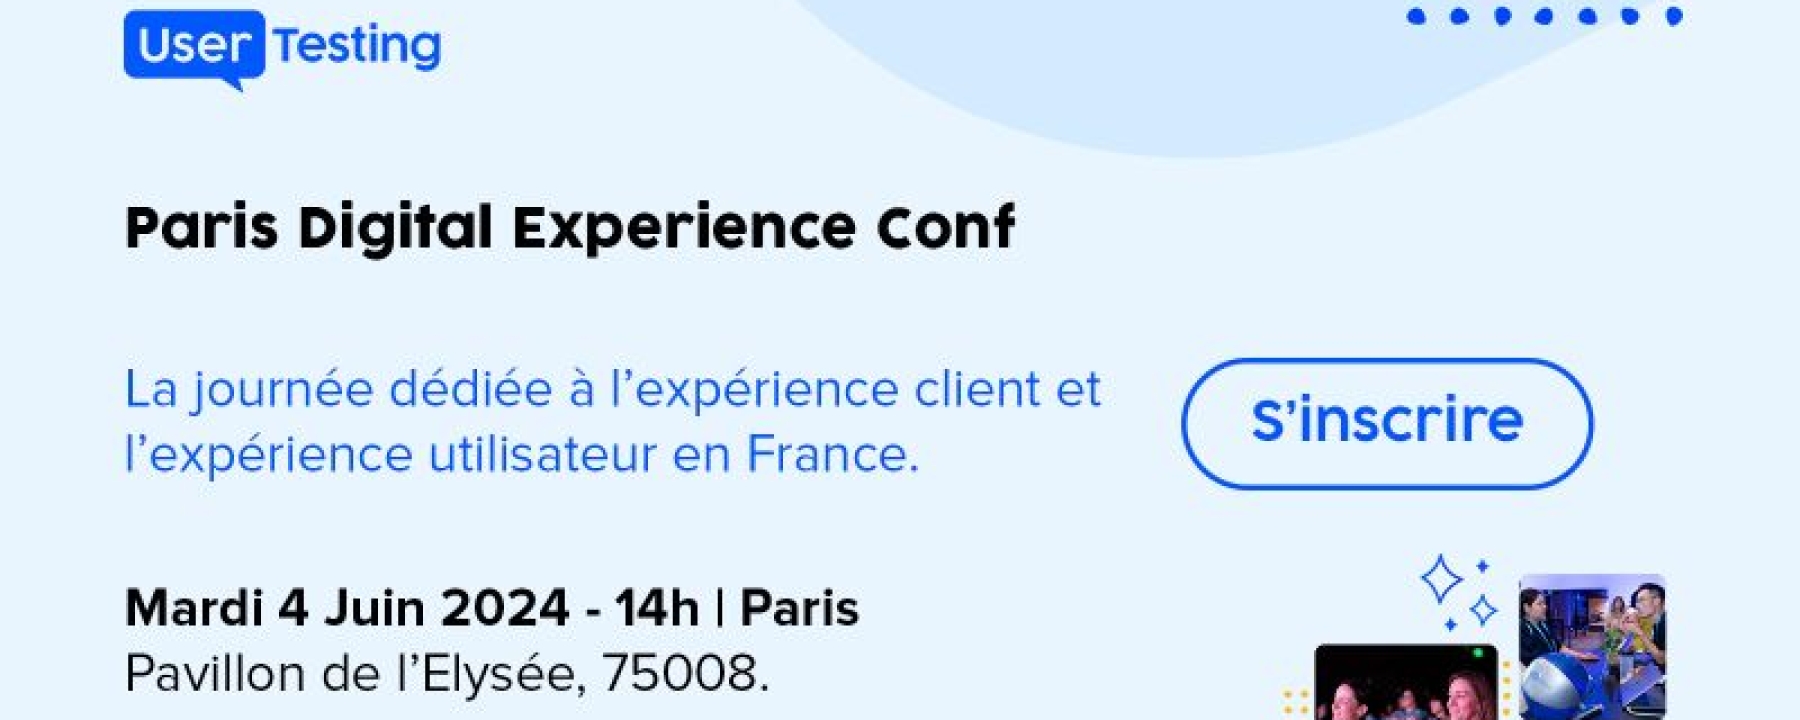 Paris Digital Experience Conf